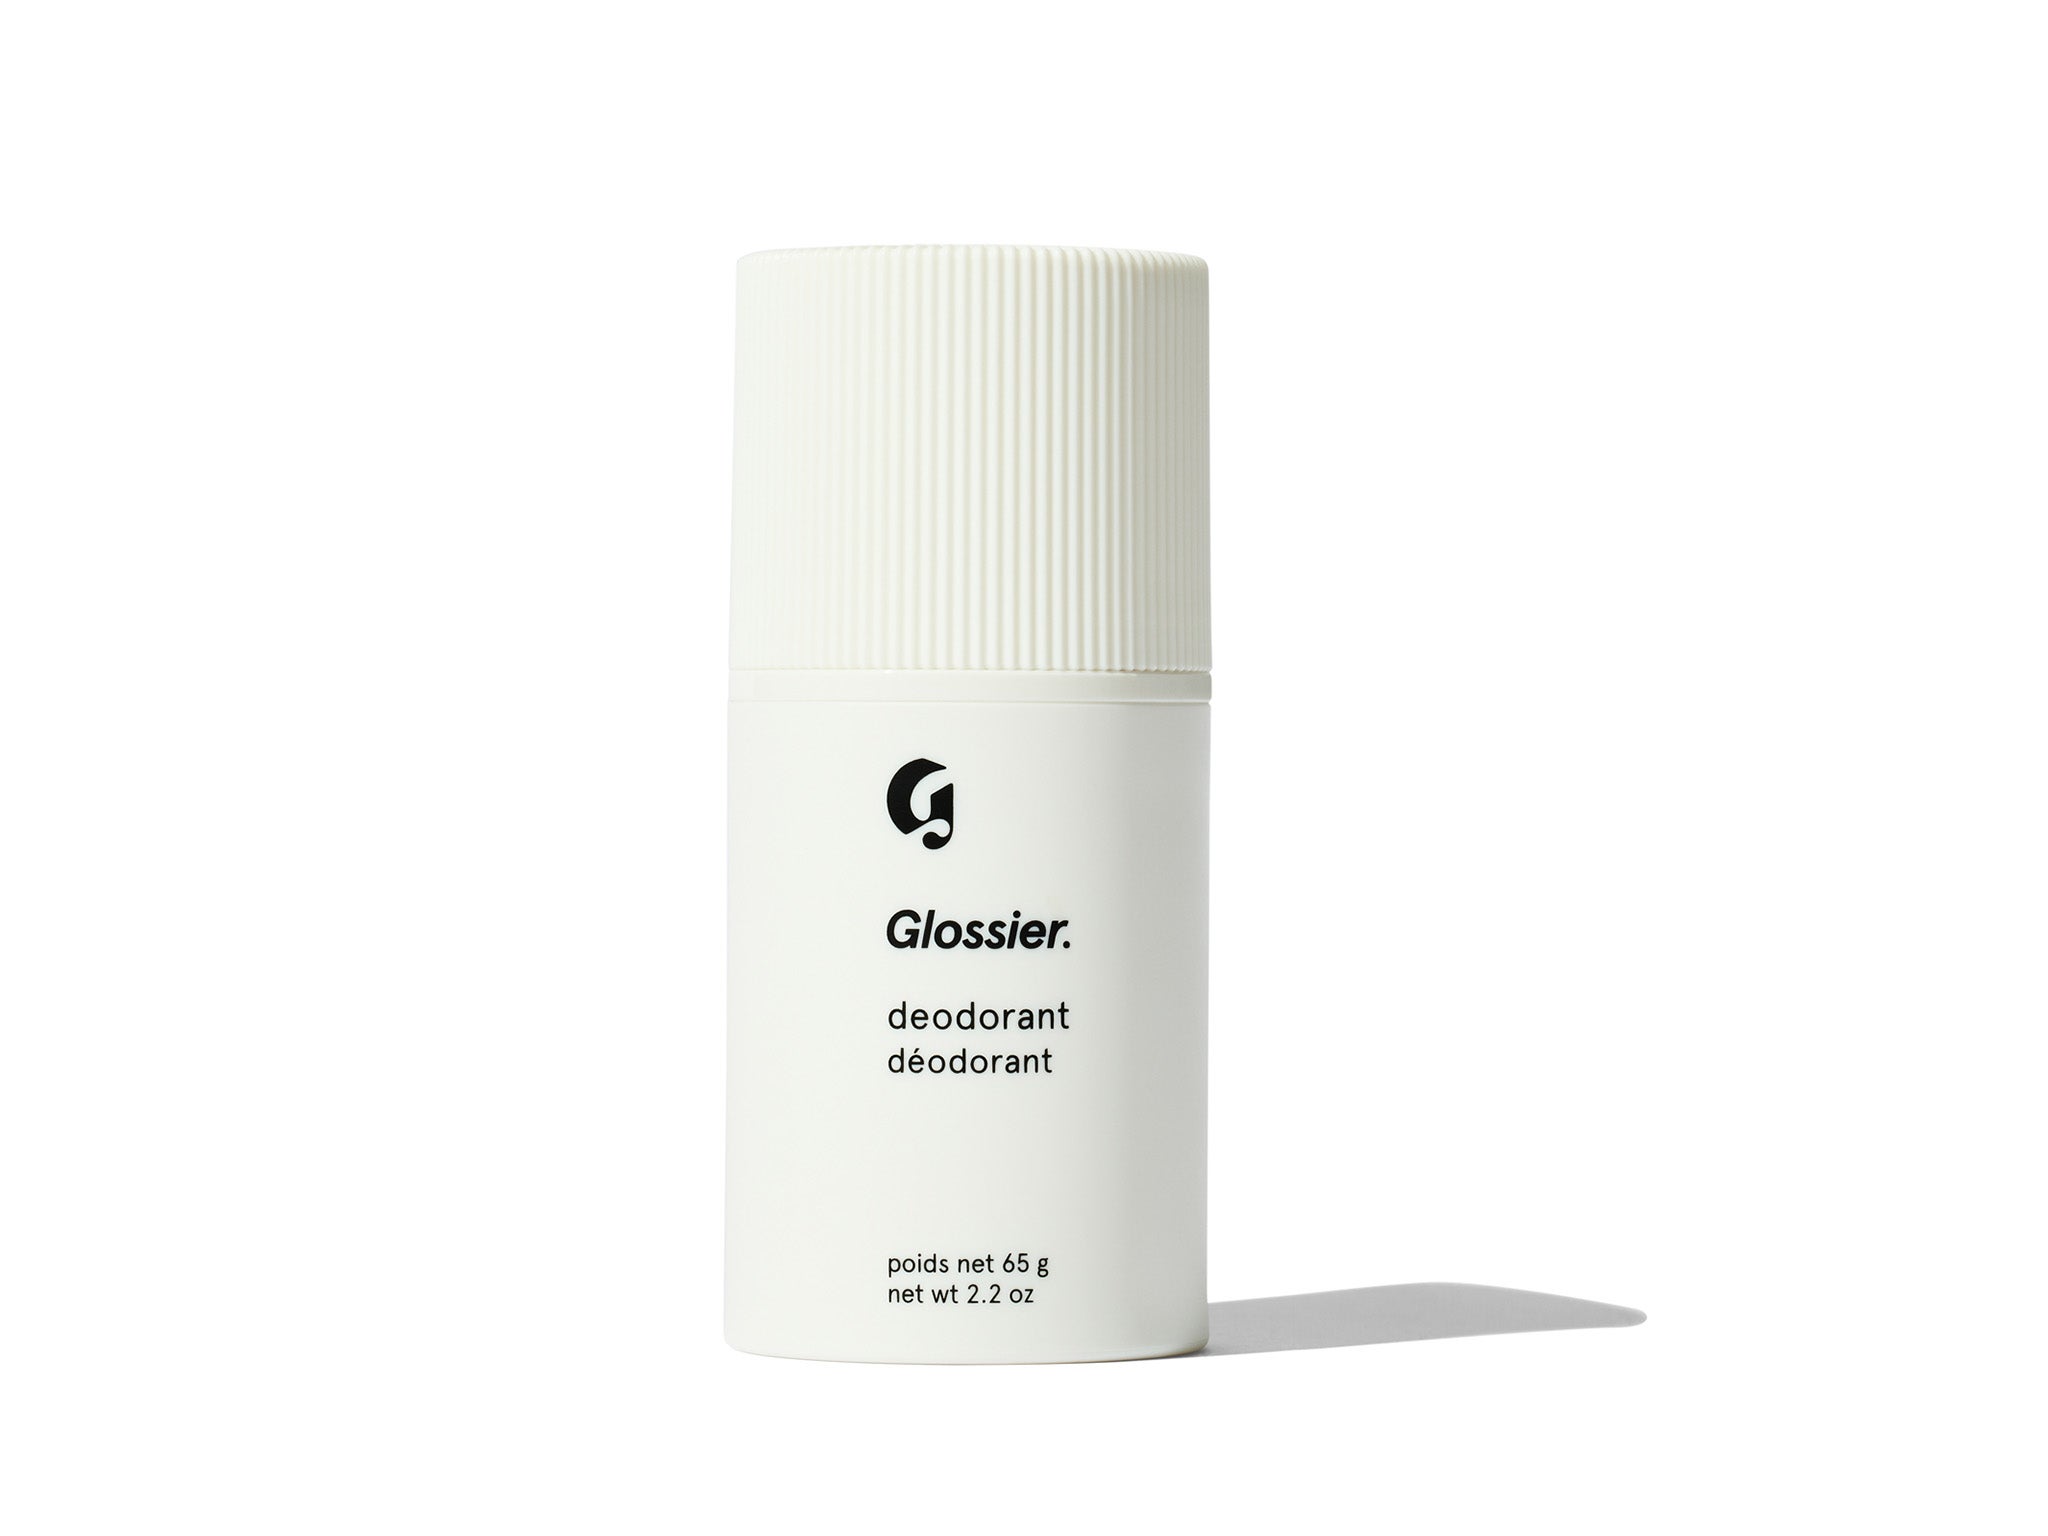 Glossier deodorant